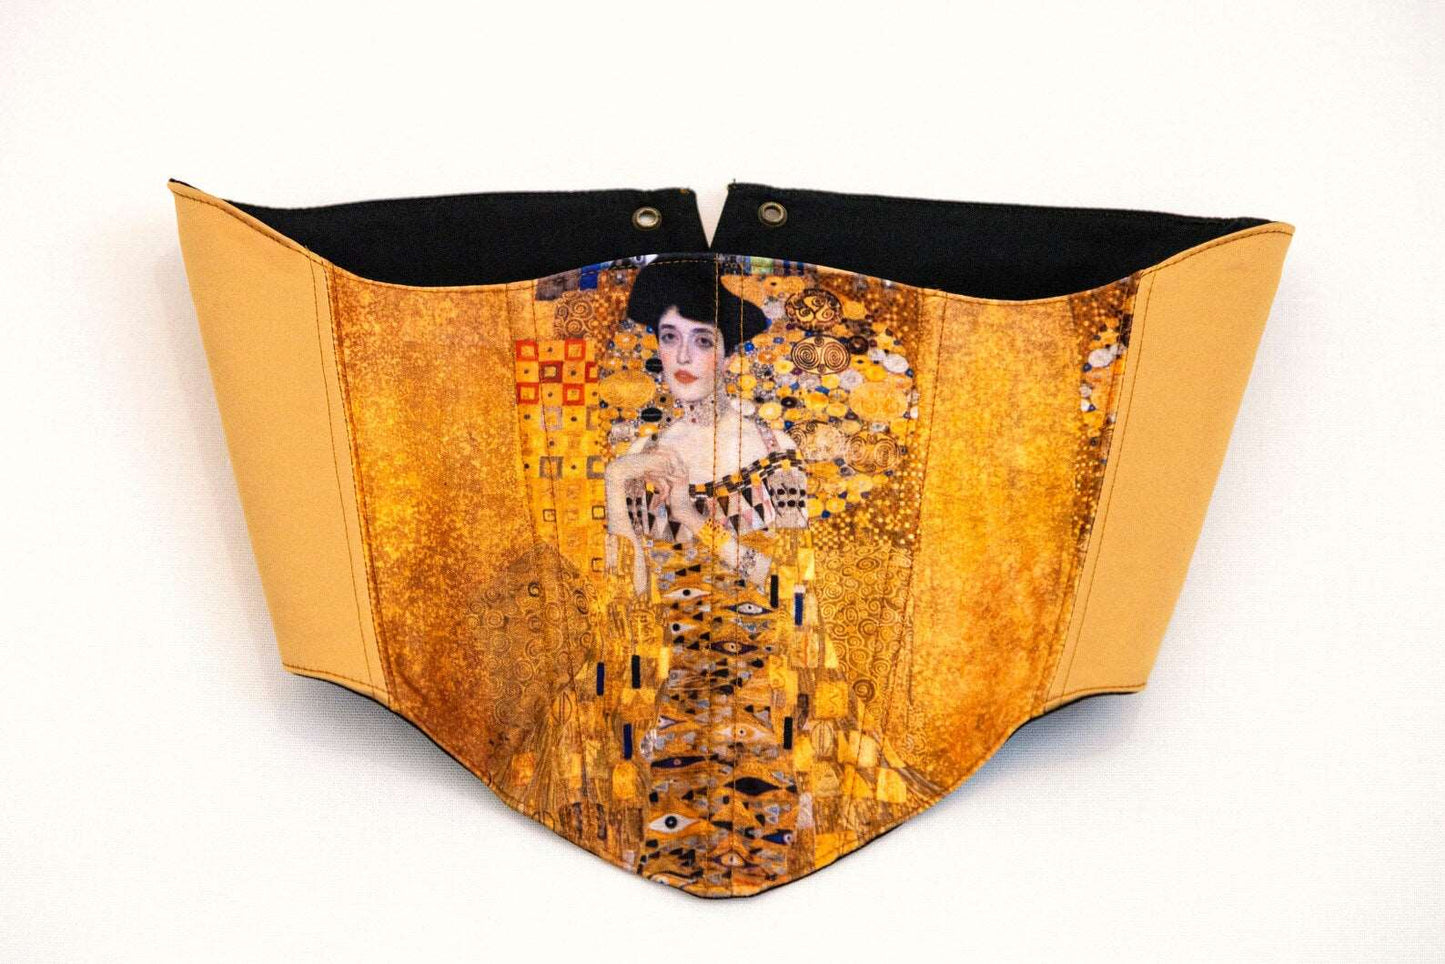 Gold underbust corset belt inspired by Portrait of Adele Bloch-Bauer